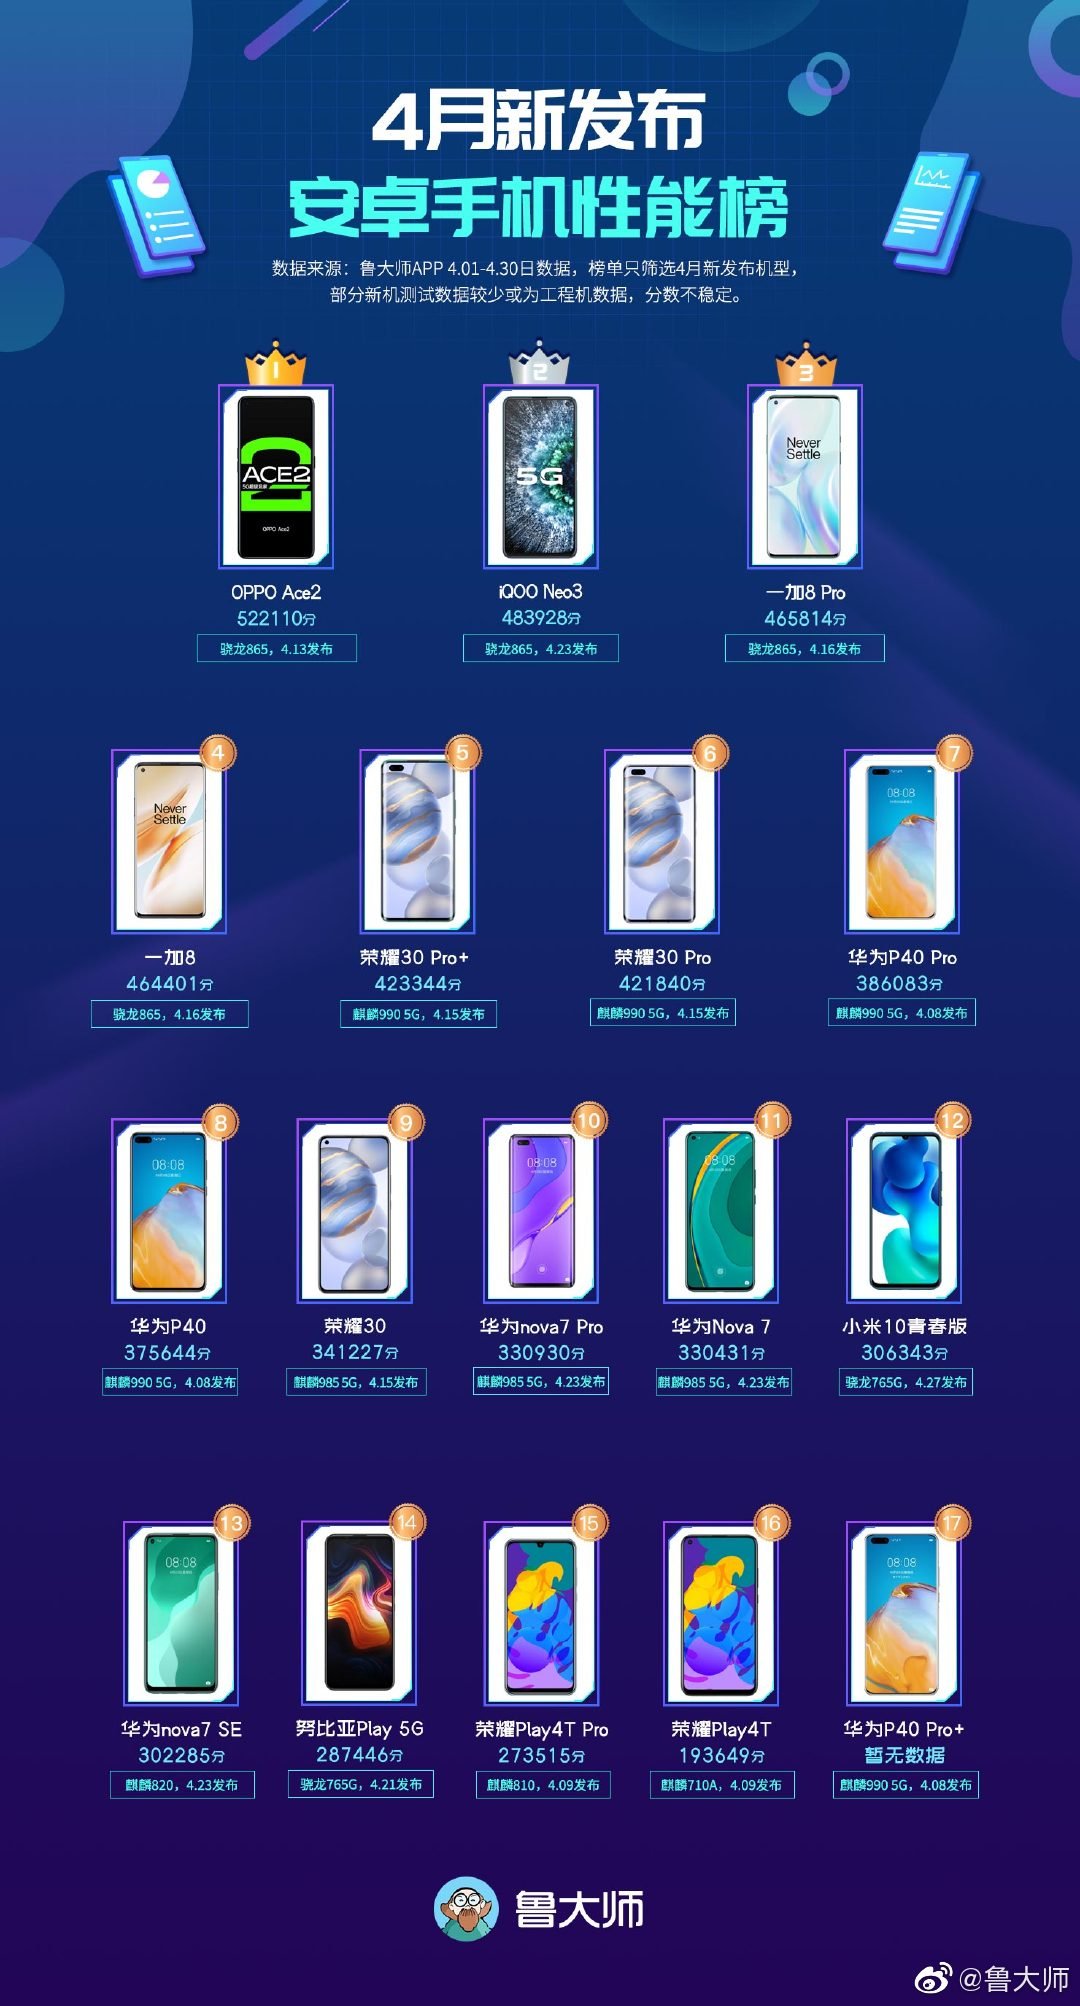 Master Lu’s best performing smartphones list for April revealed